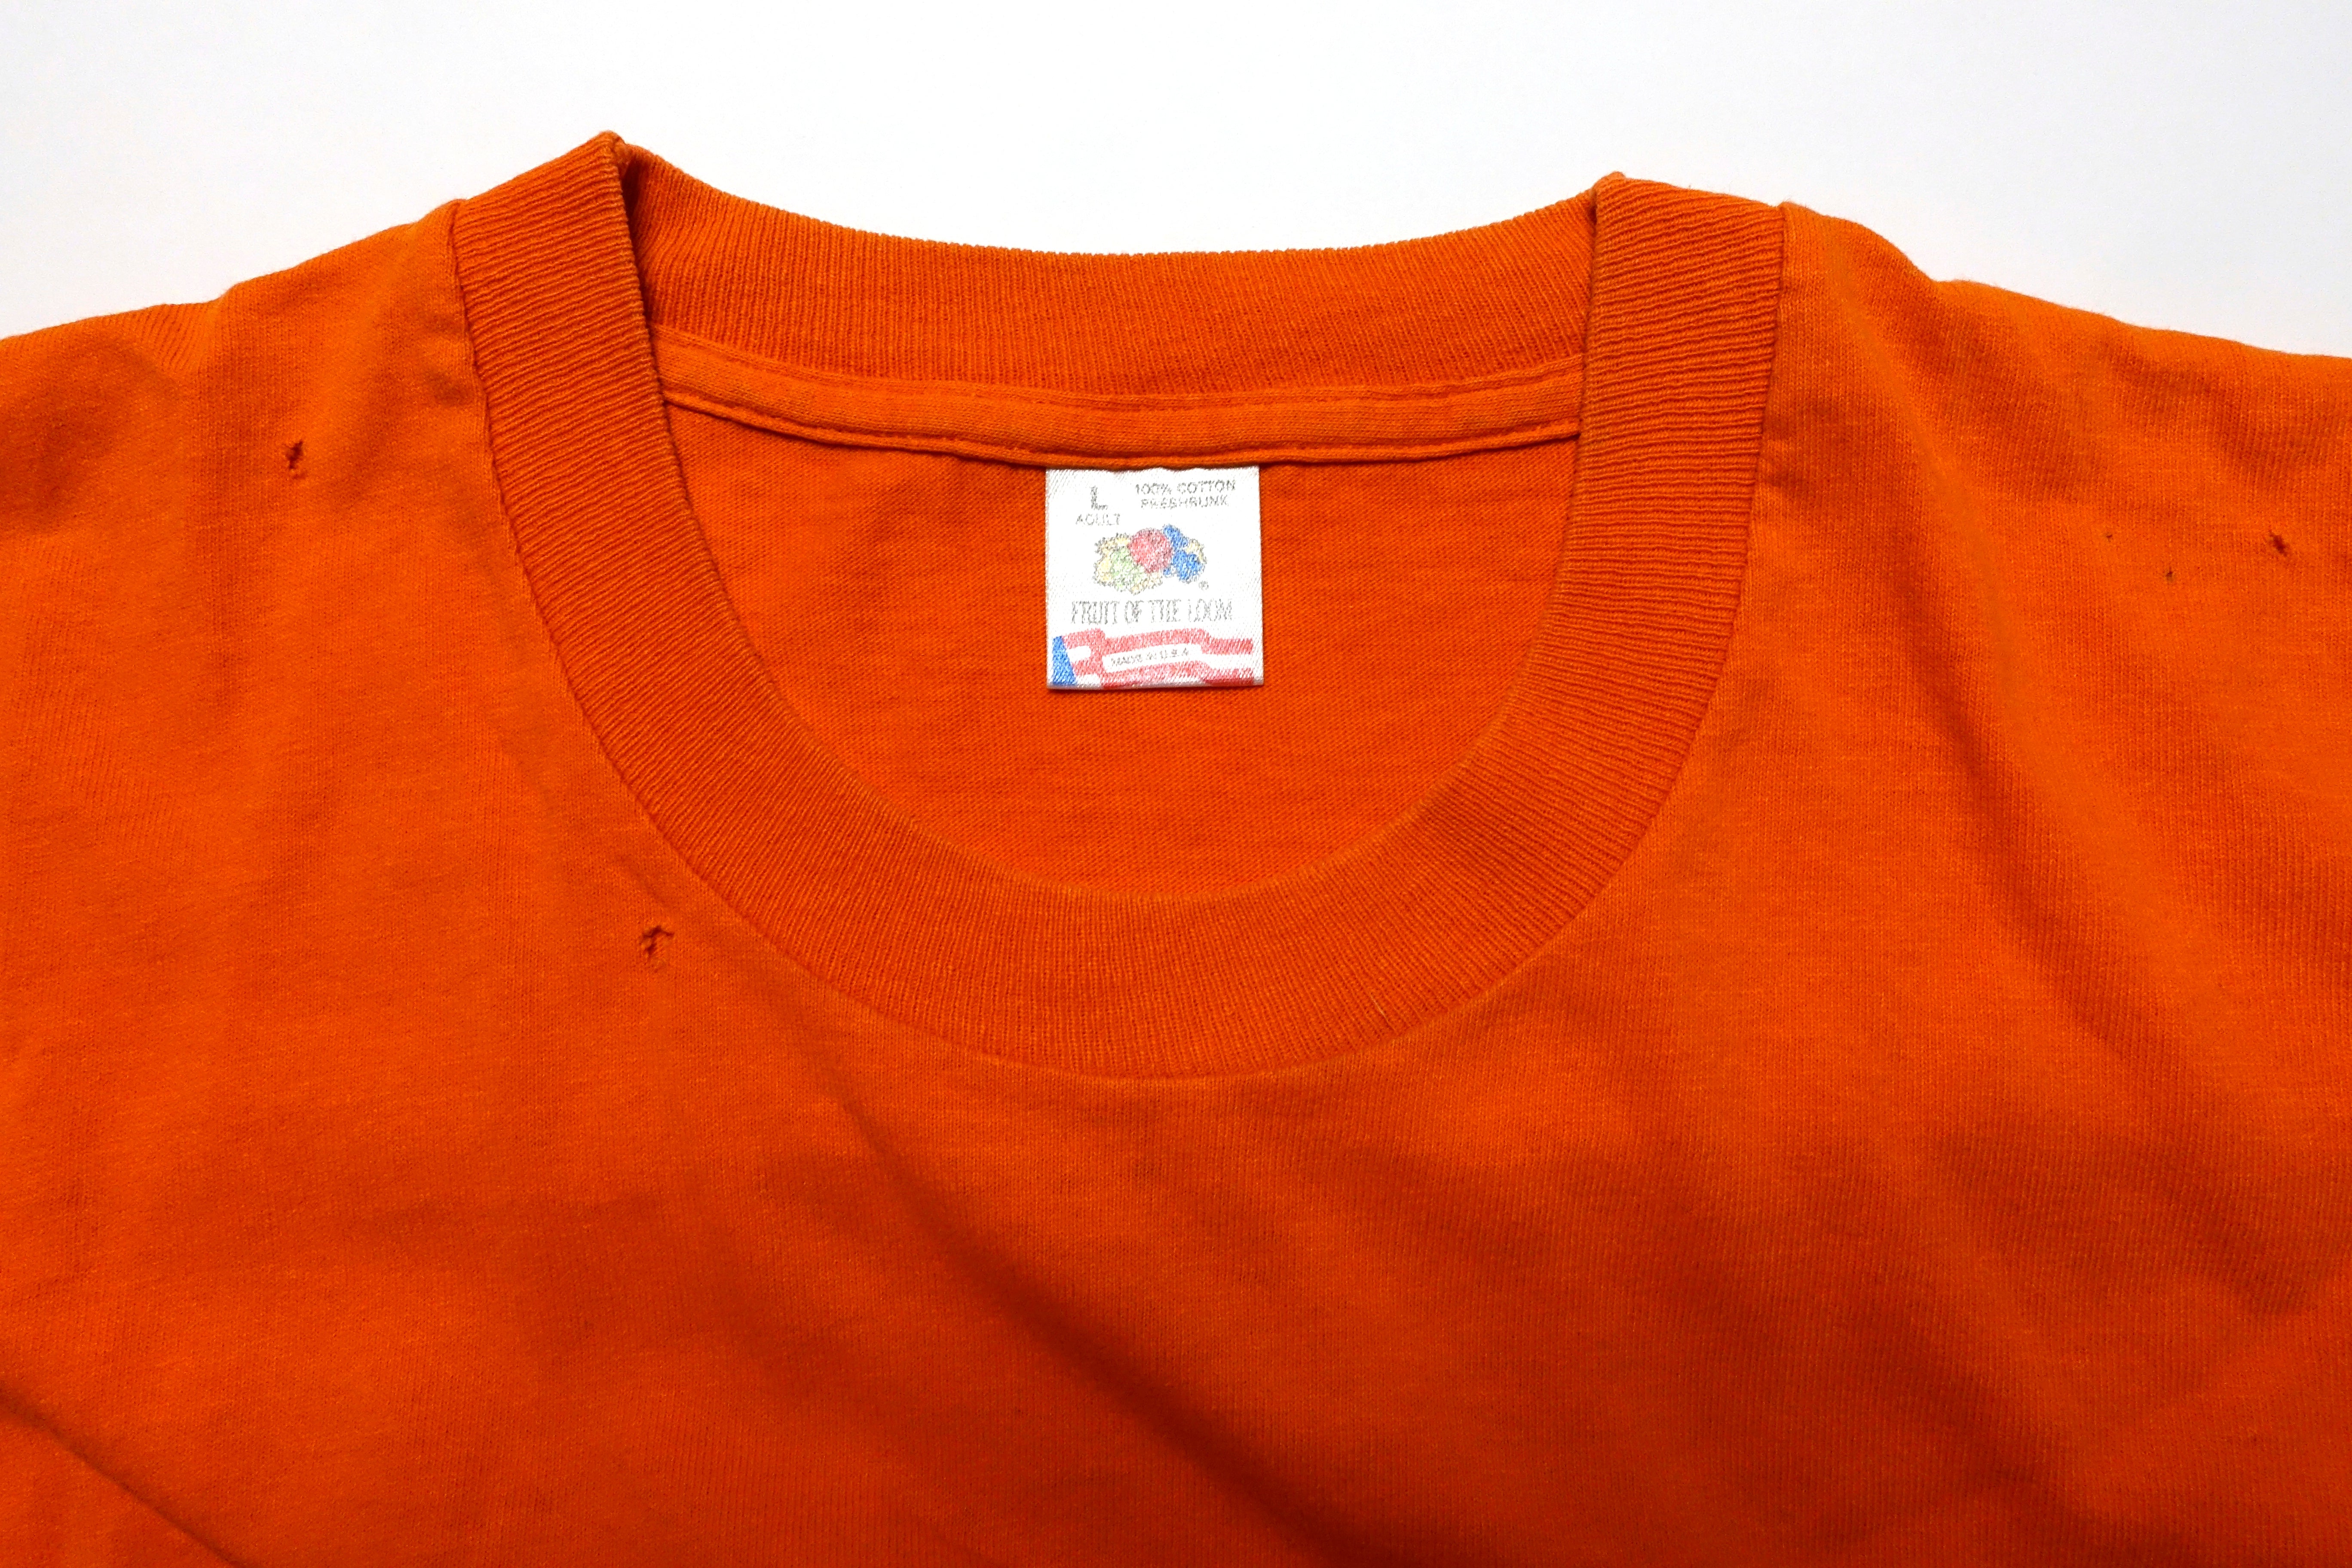 Stereolab – Ping Pong 90's Tour Shirt Size XL (Orange)